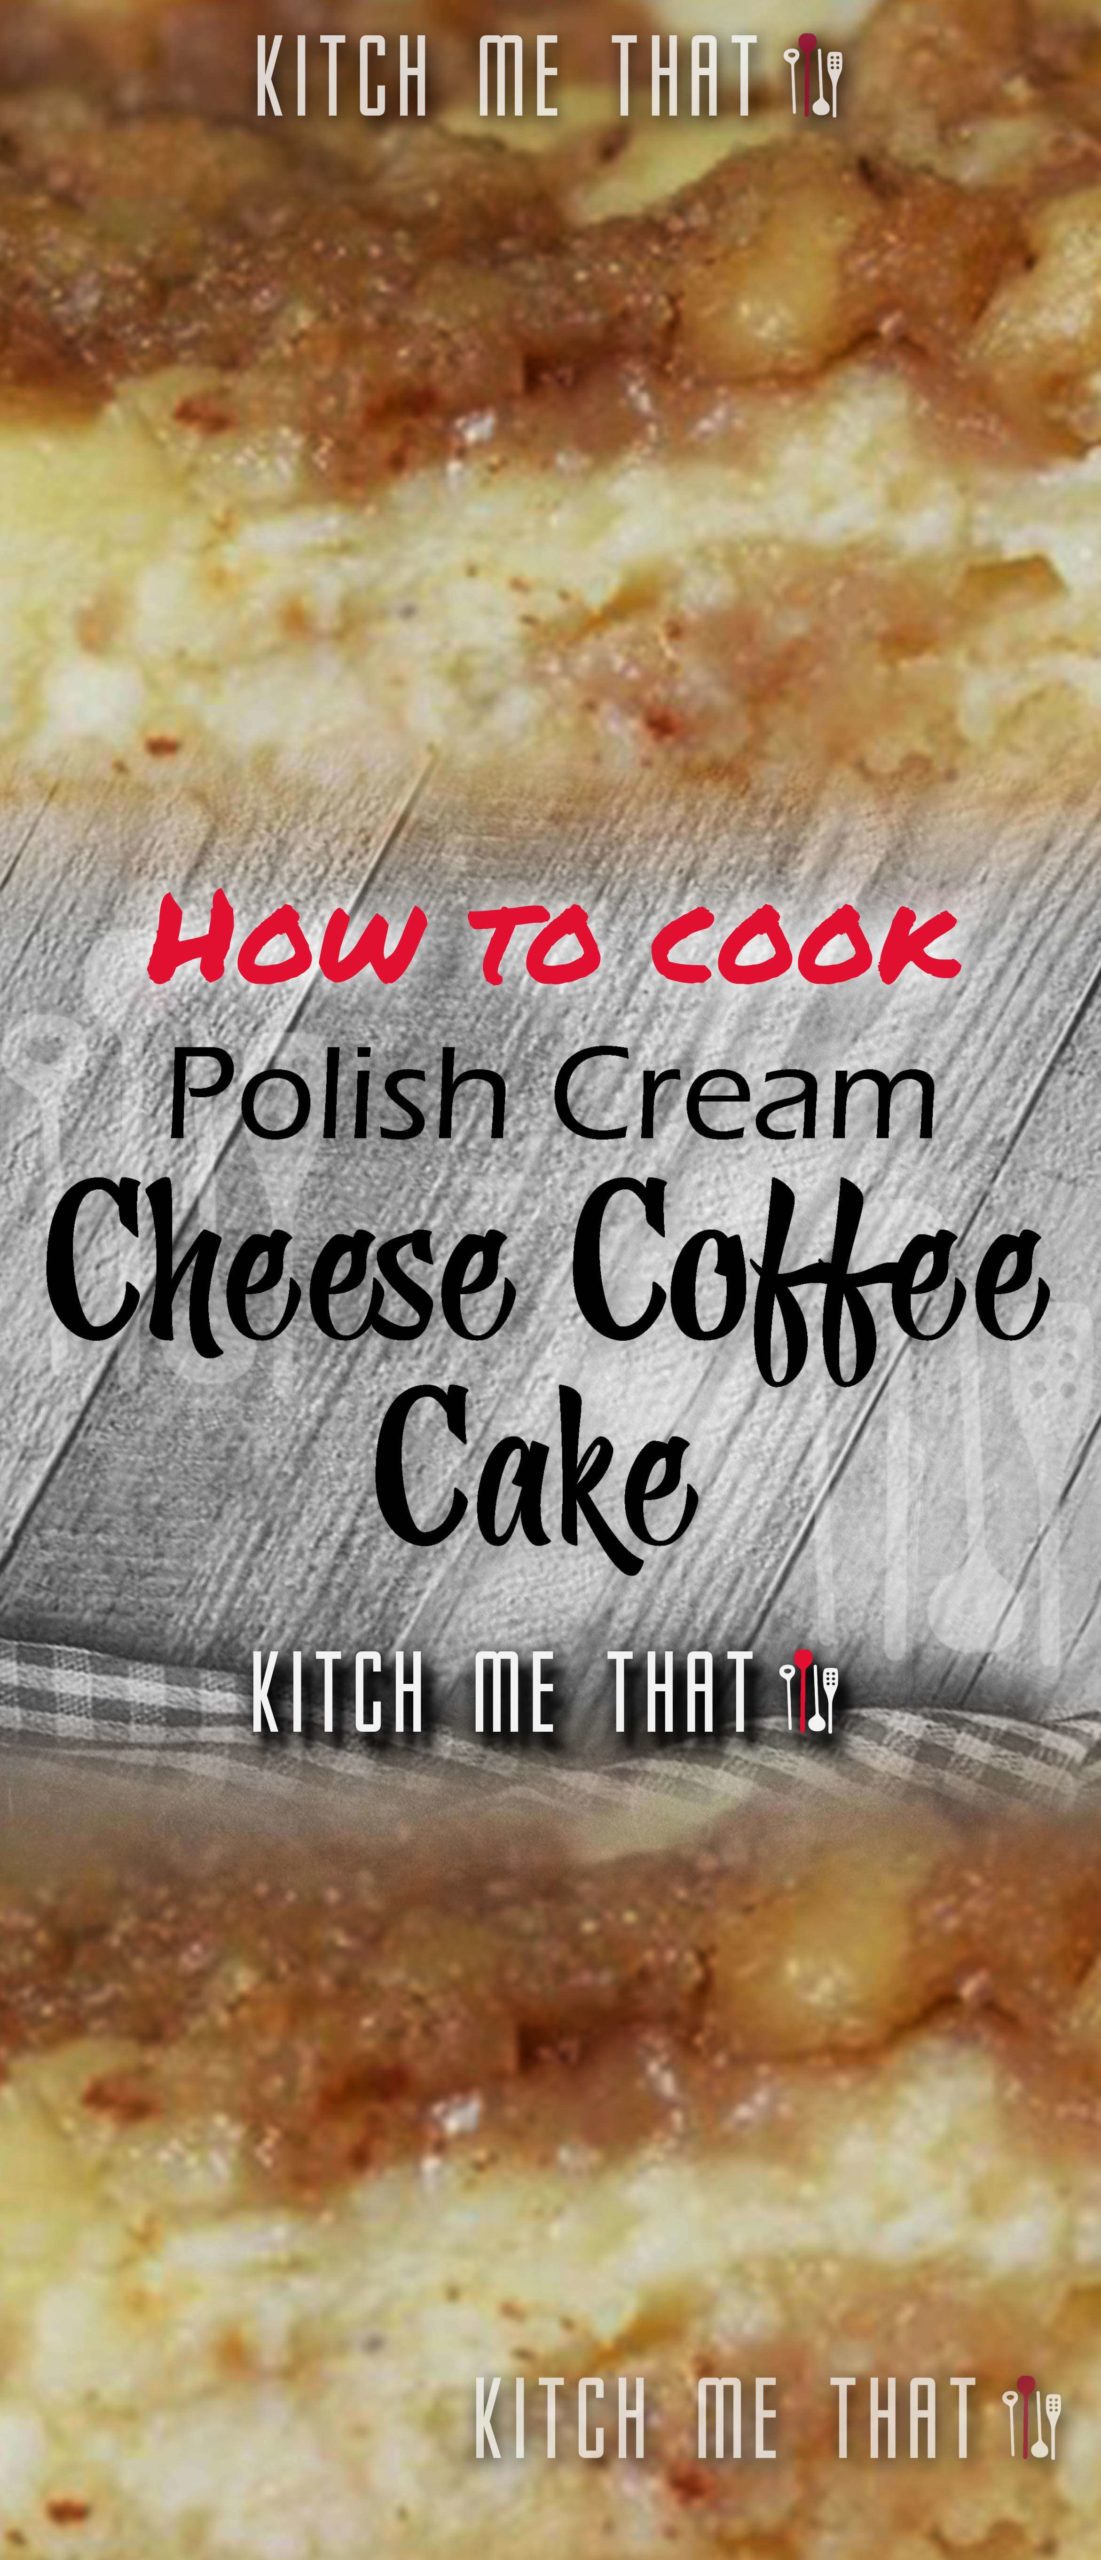 Polish Cream Cheese Coffee Cake